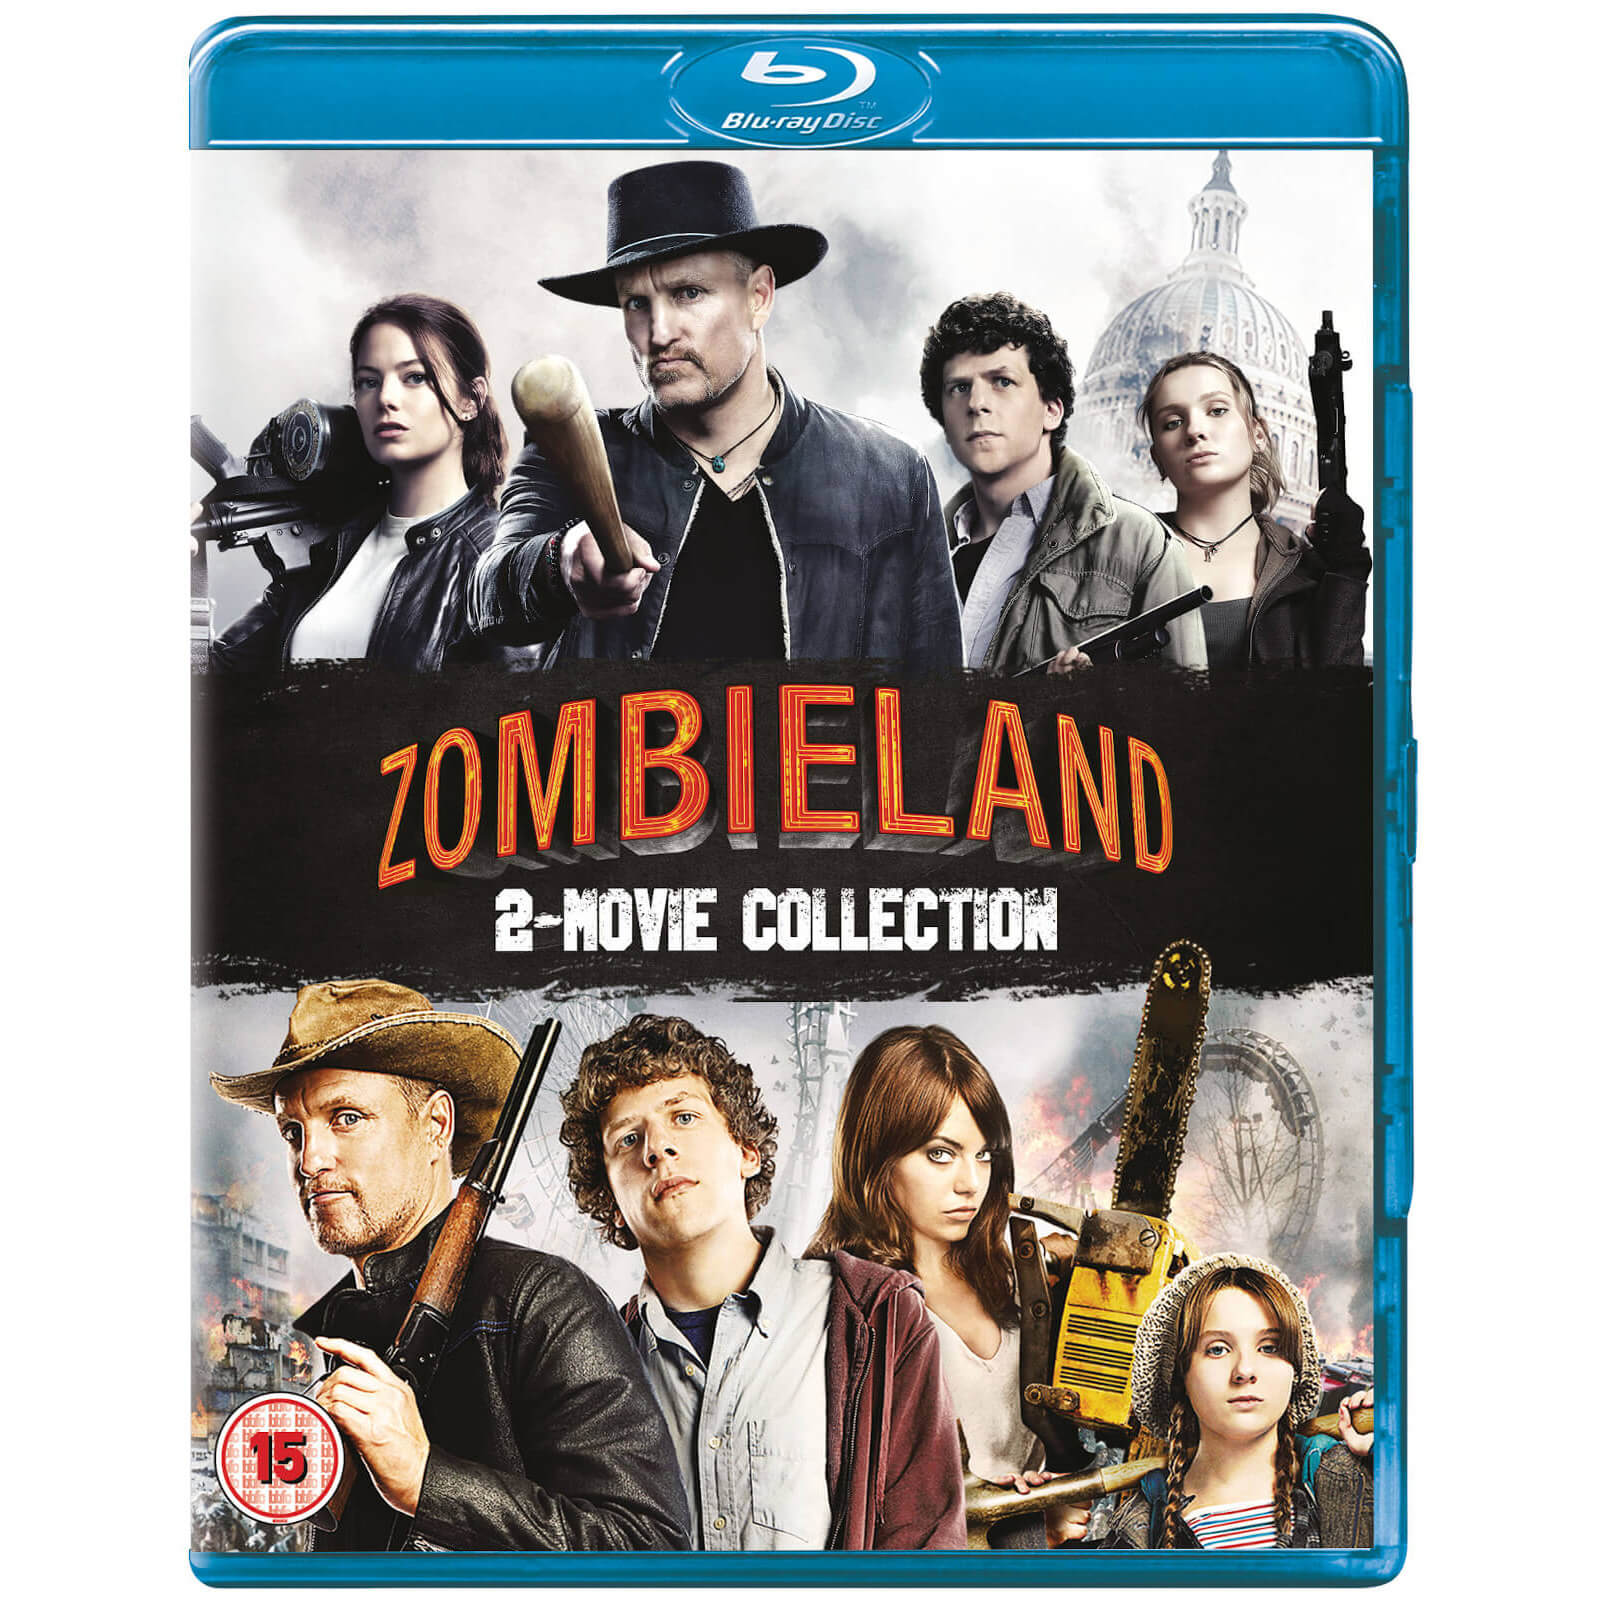 Zombieland & Zombieland 2: Double Tap - Box-Set von Sony Pictures